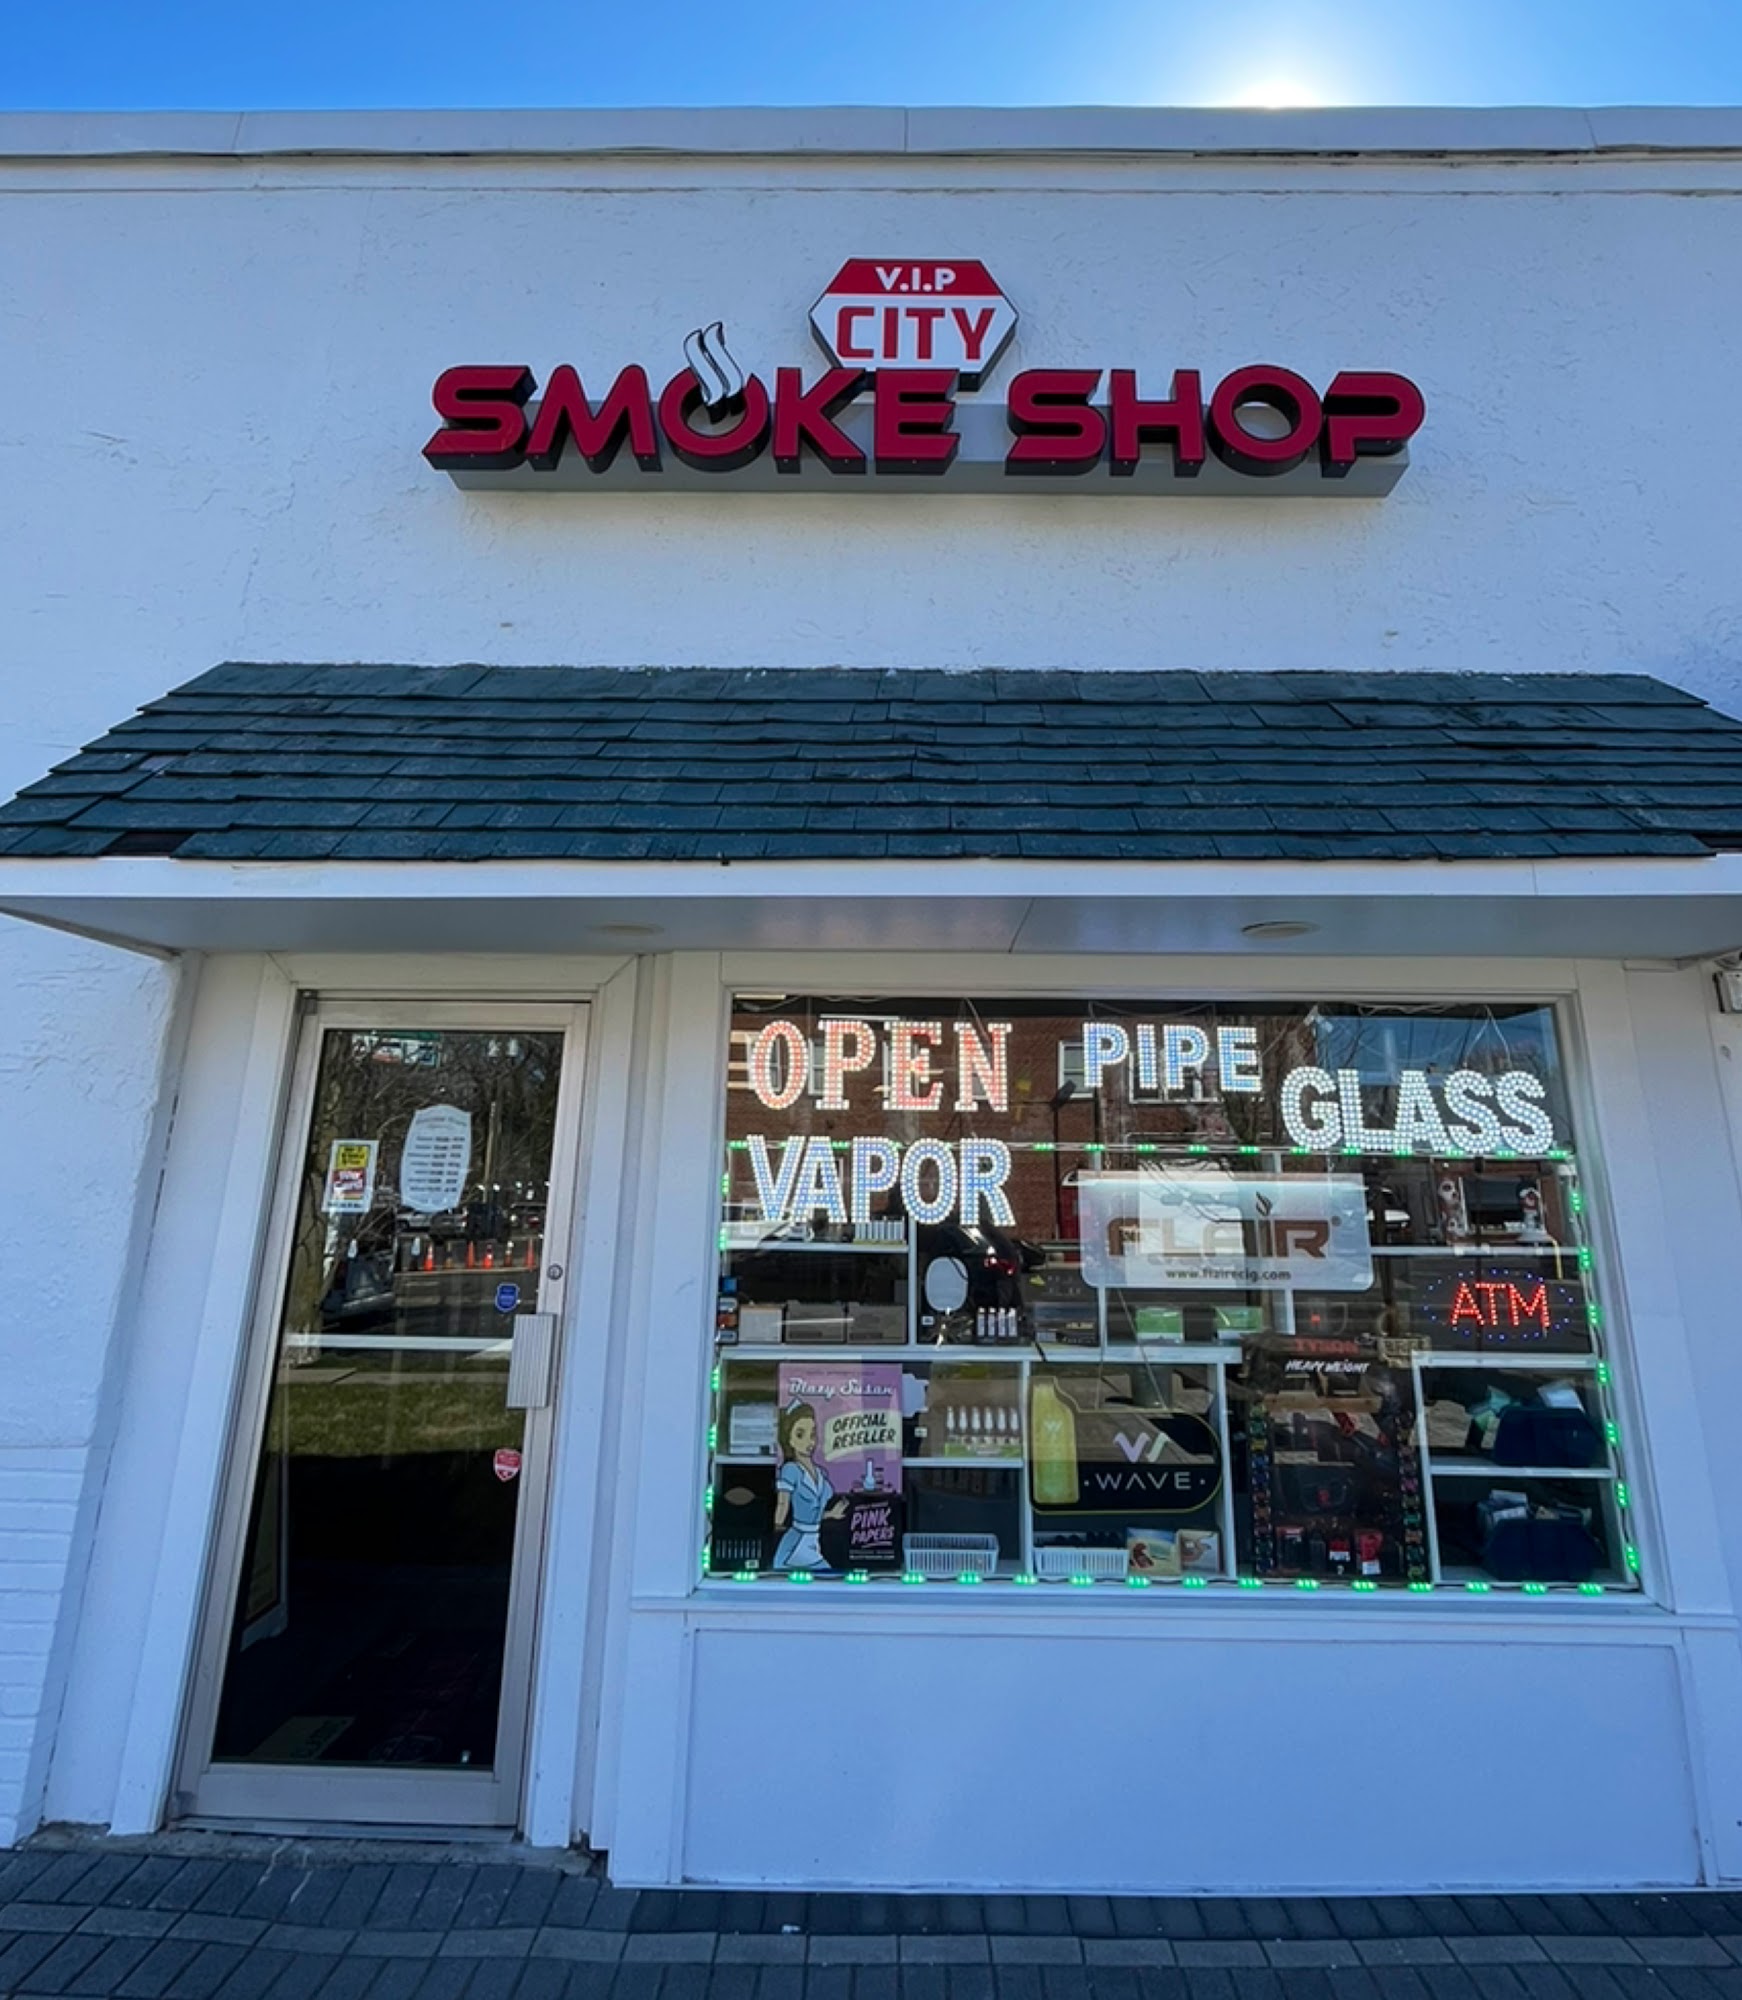 Vip City Smoke Shop